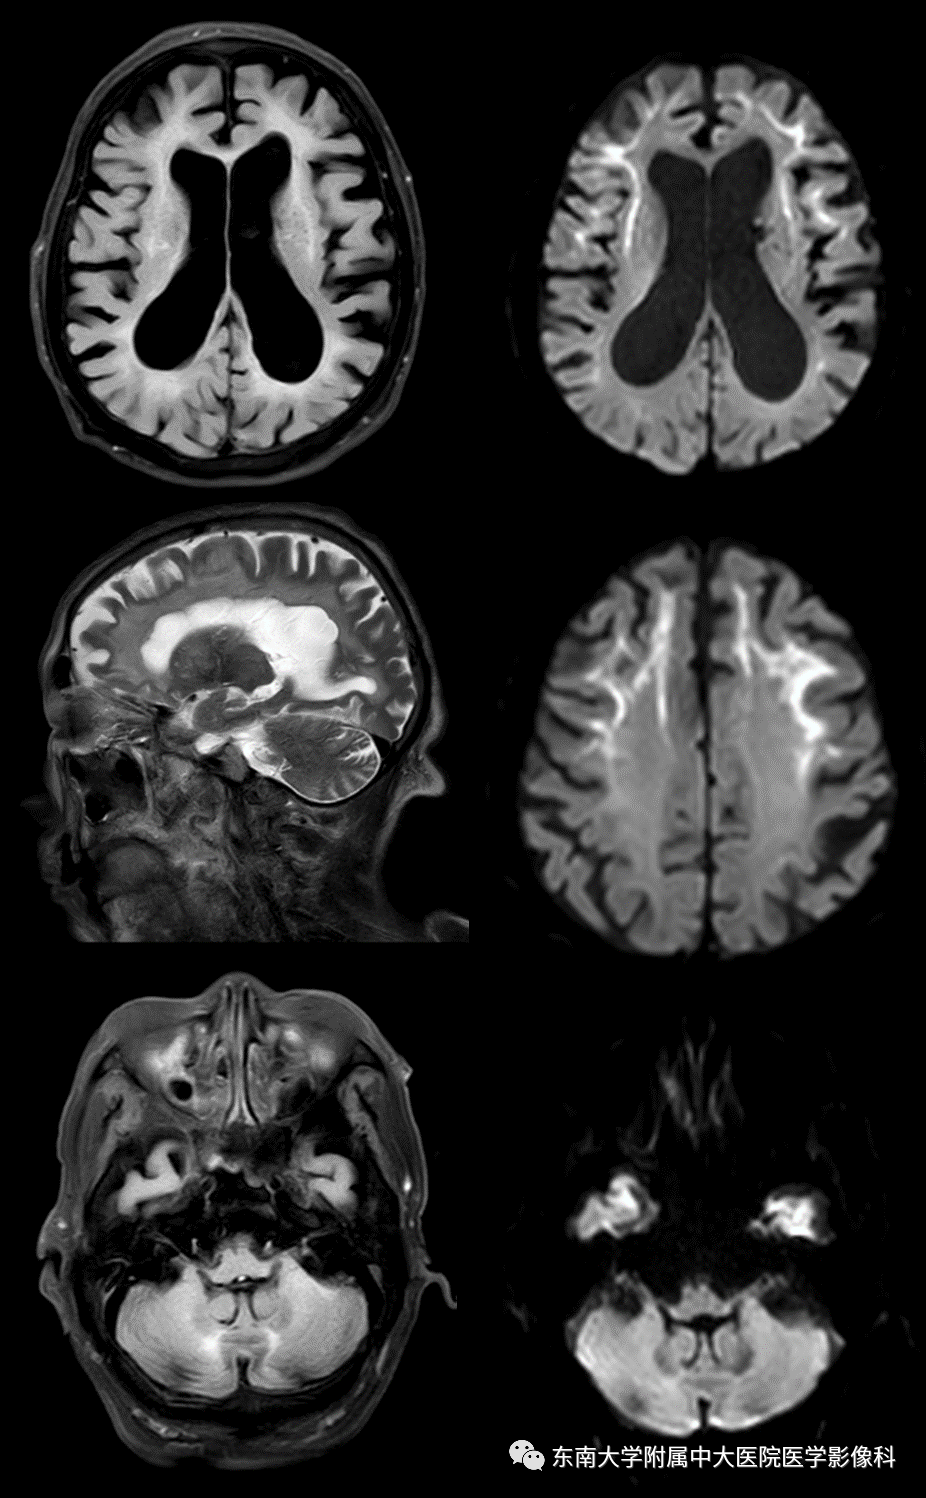 【PPT】神经元核内包涵体病（NIID）的影像学诊断